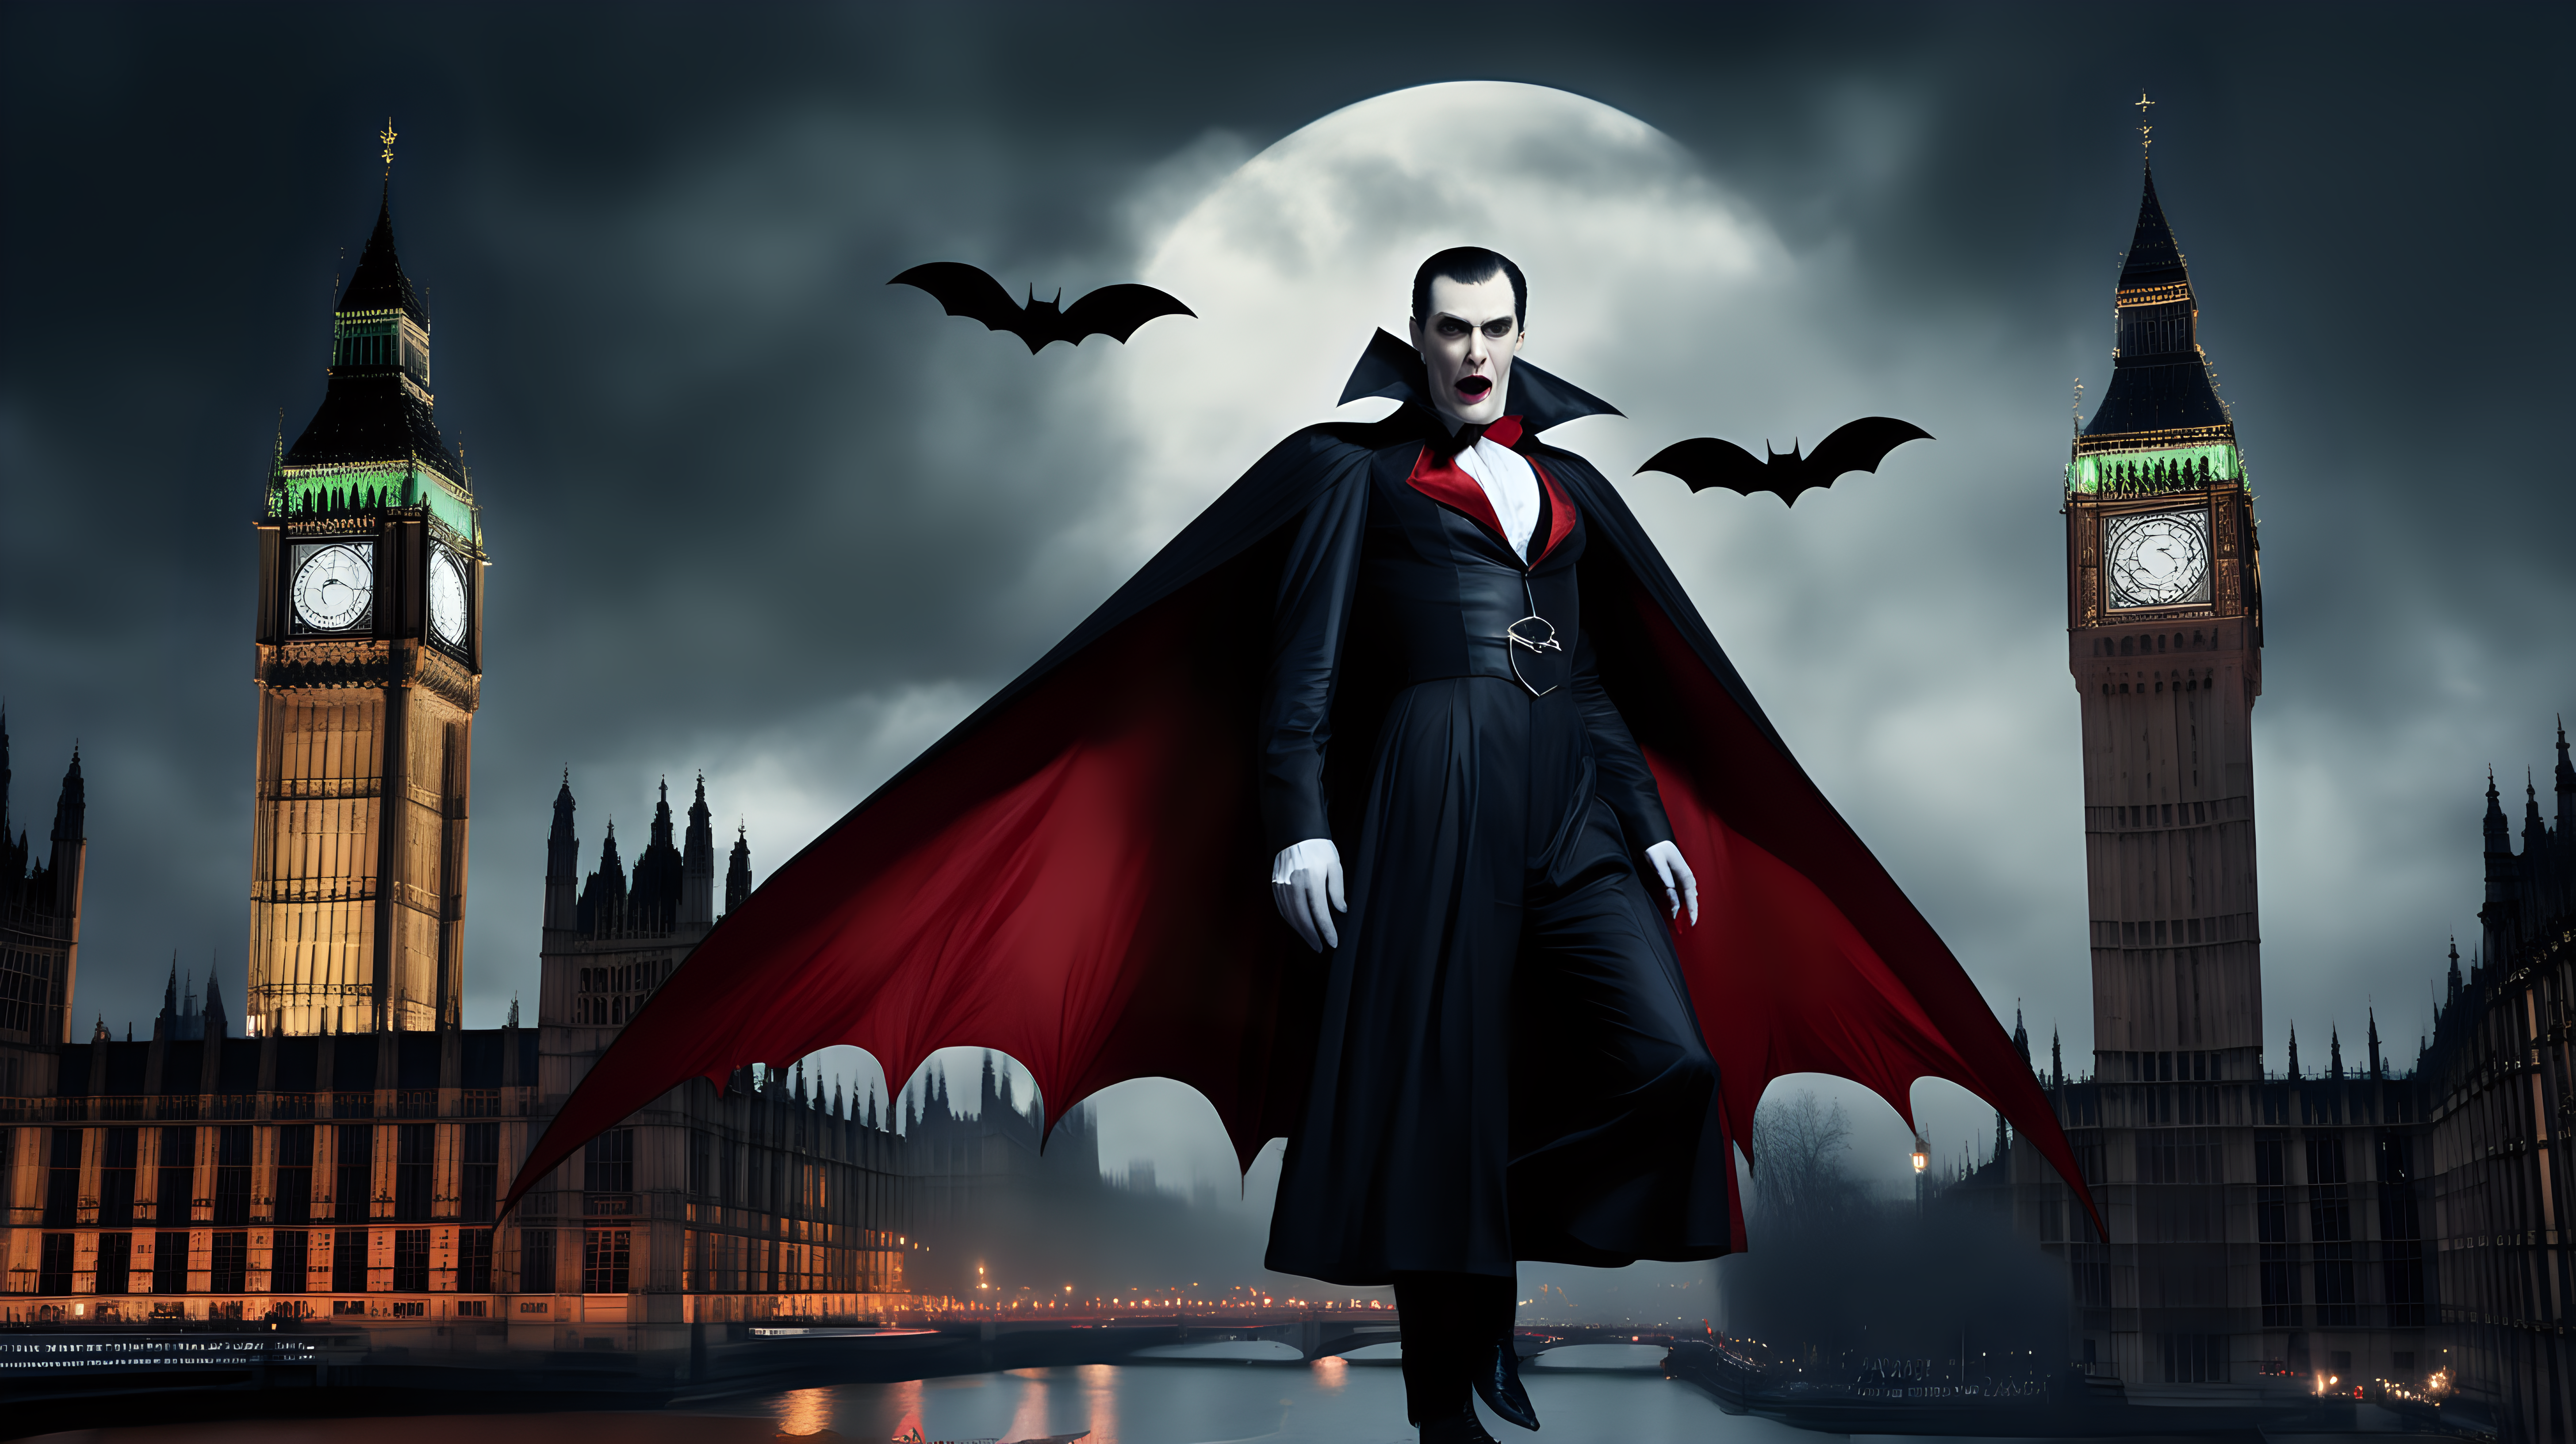 Dracula flying over Big Ben